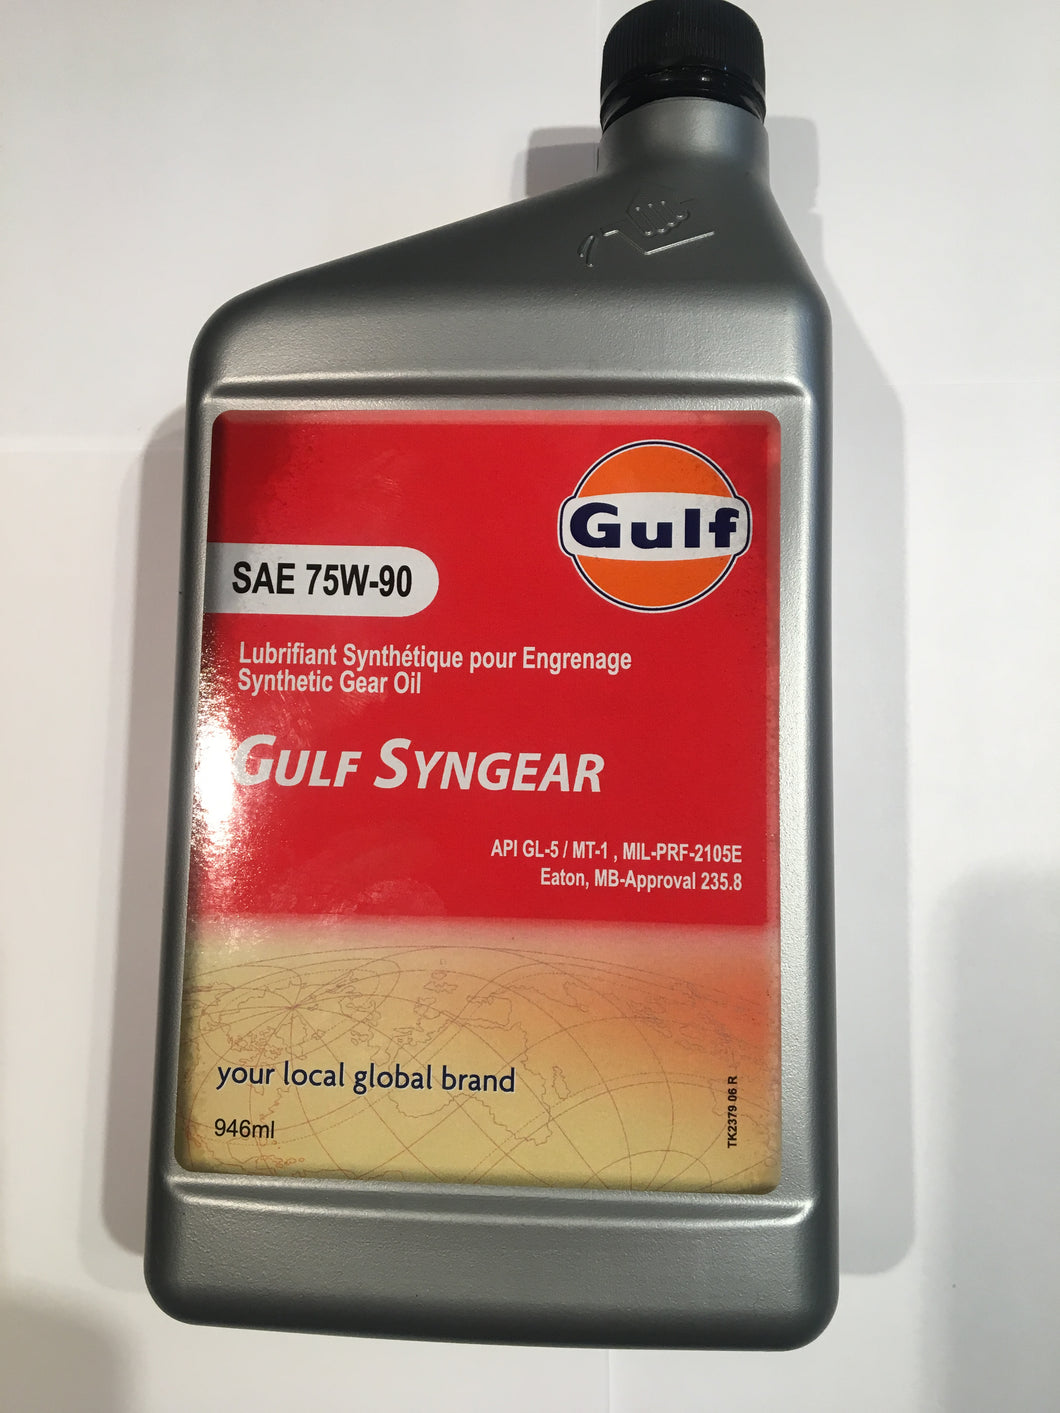 Gulf Syngear SAE 75W-90 Synthetic Gear Oil 946ml